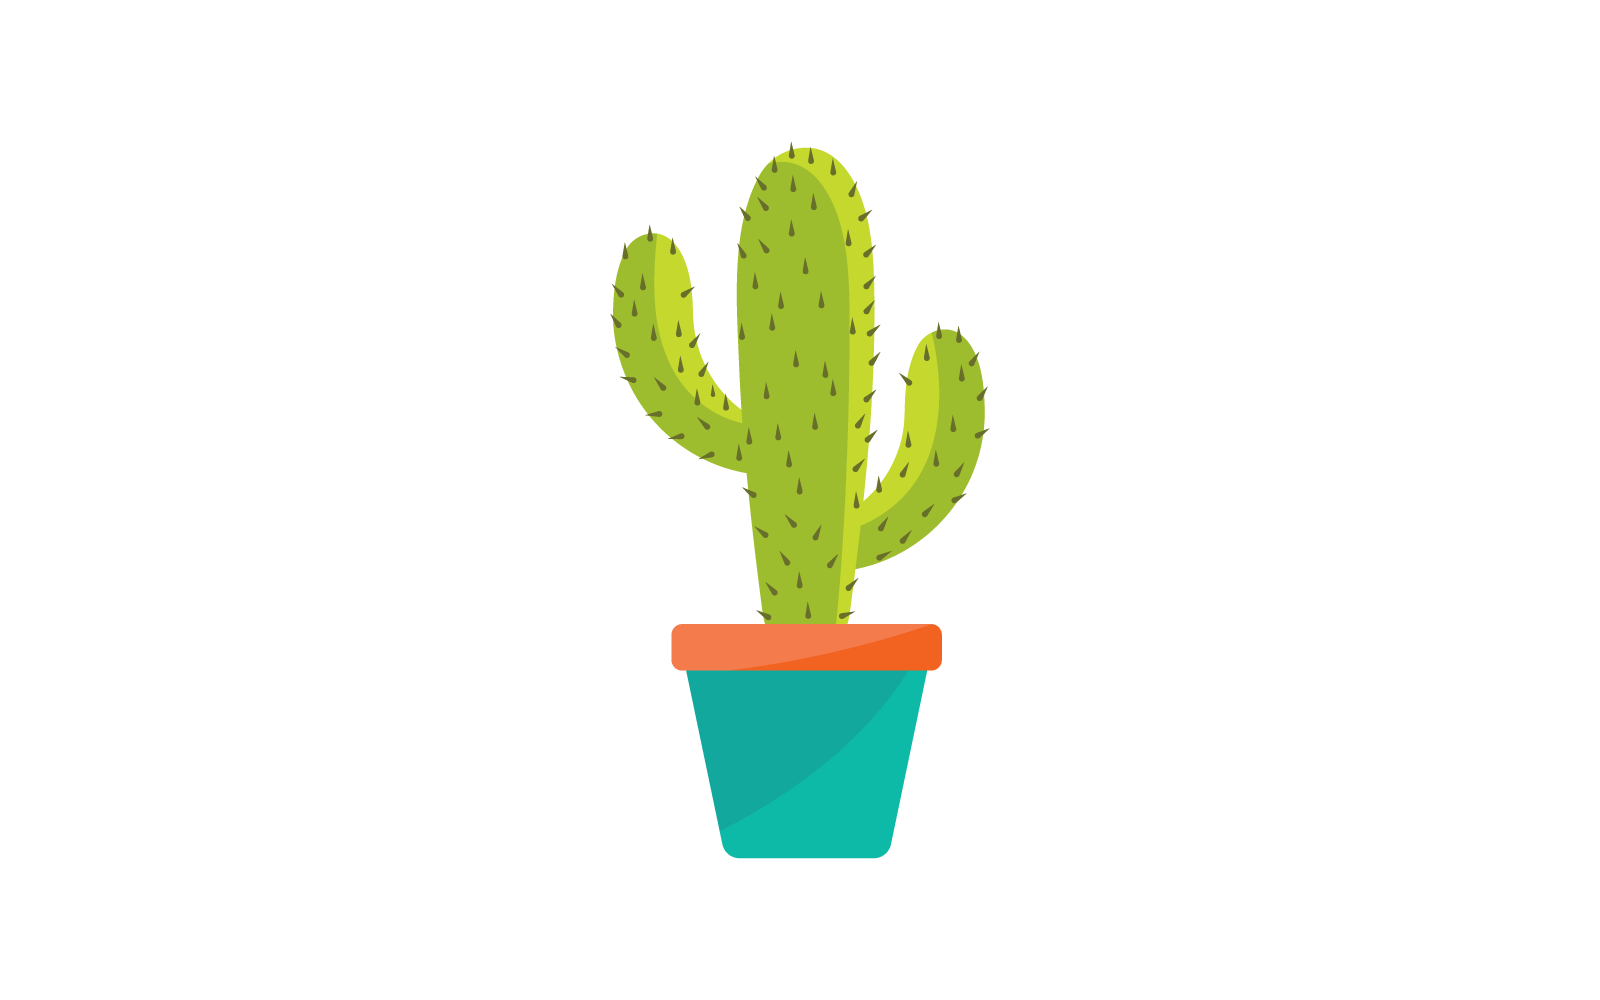 Cactus illustration vector flat design template